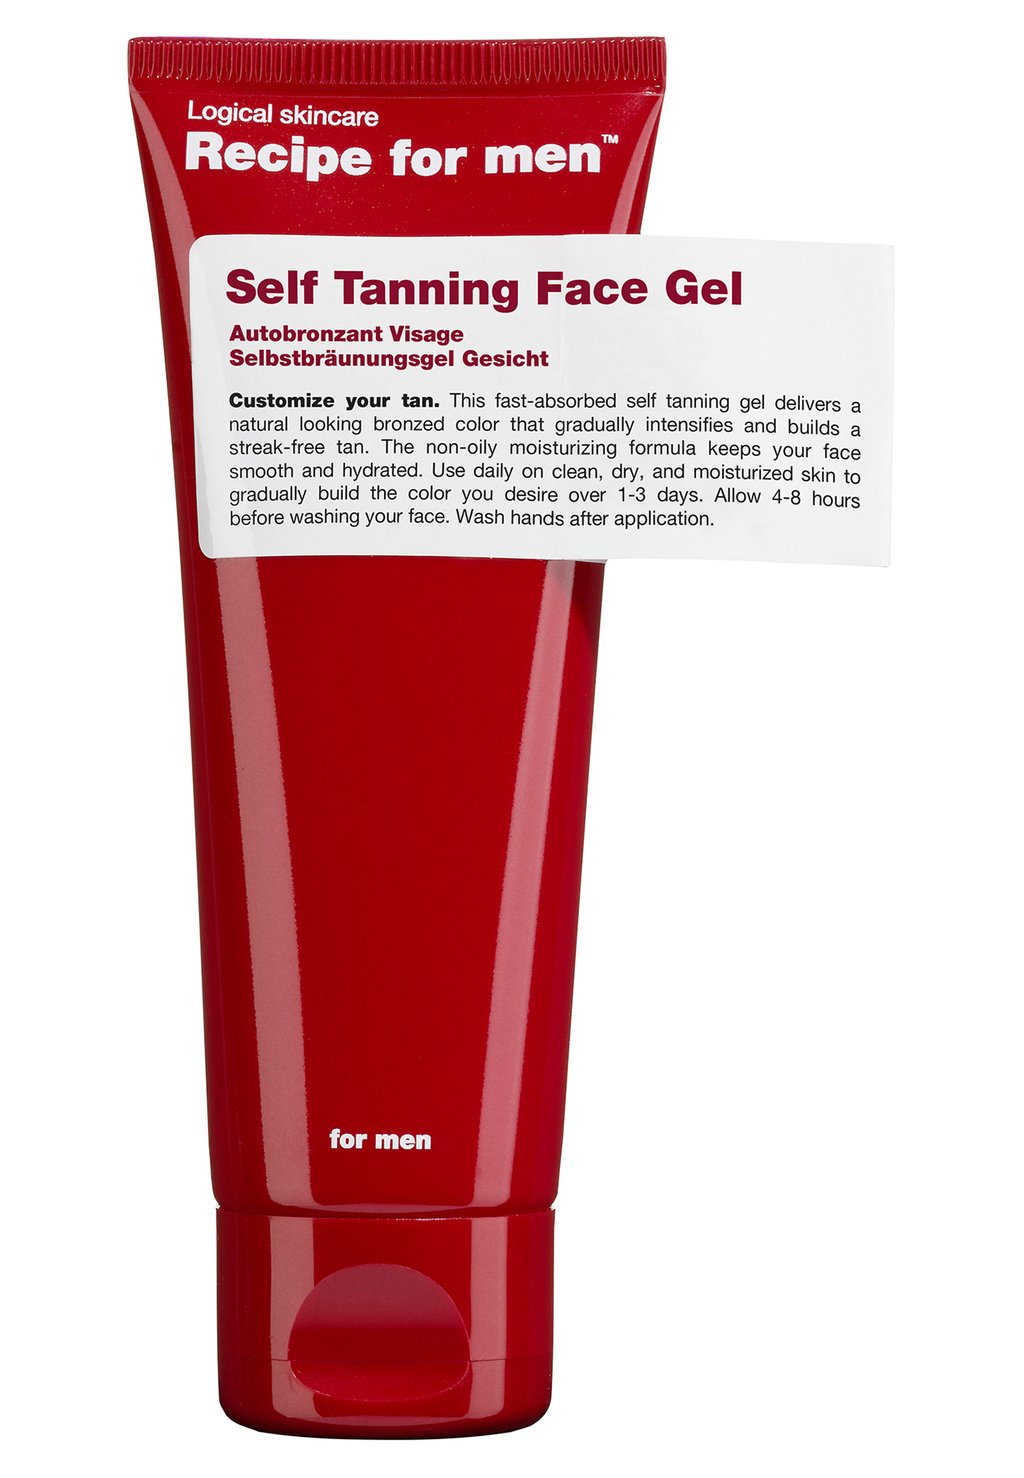 Автозагар SELF TANNING GEL Recipe For Men sensai self tanning for face